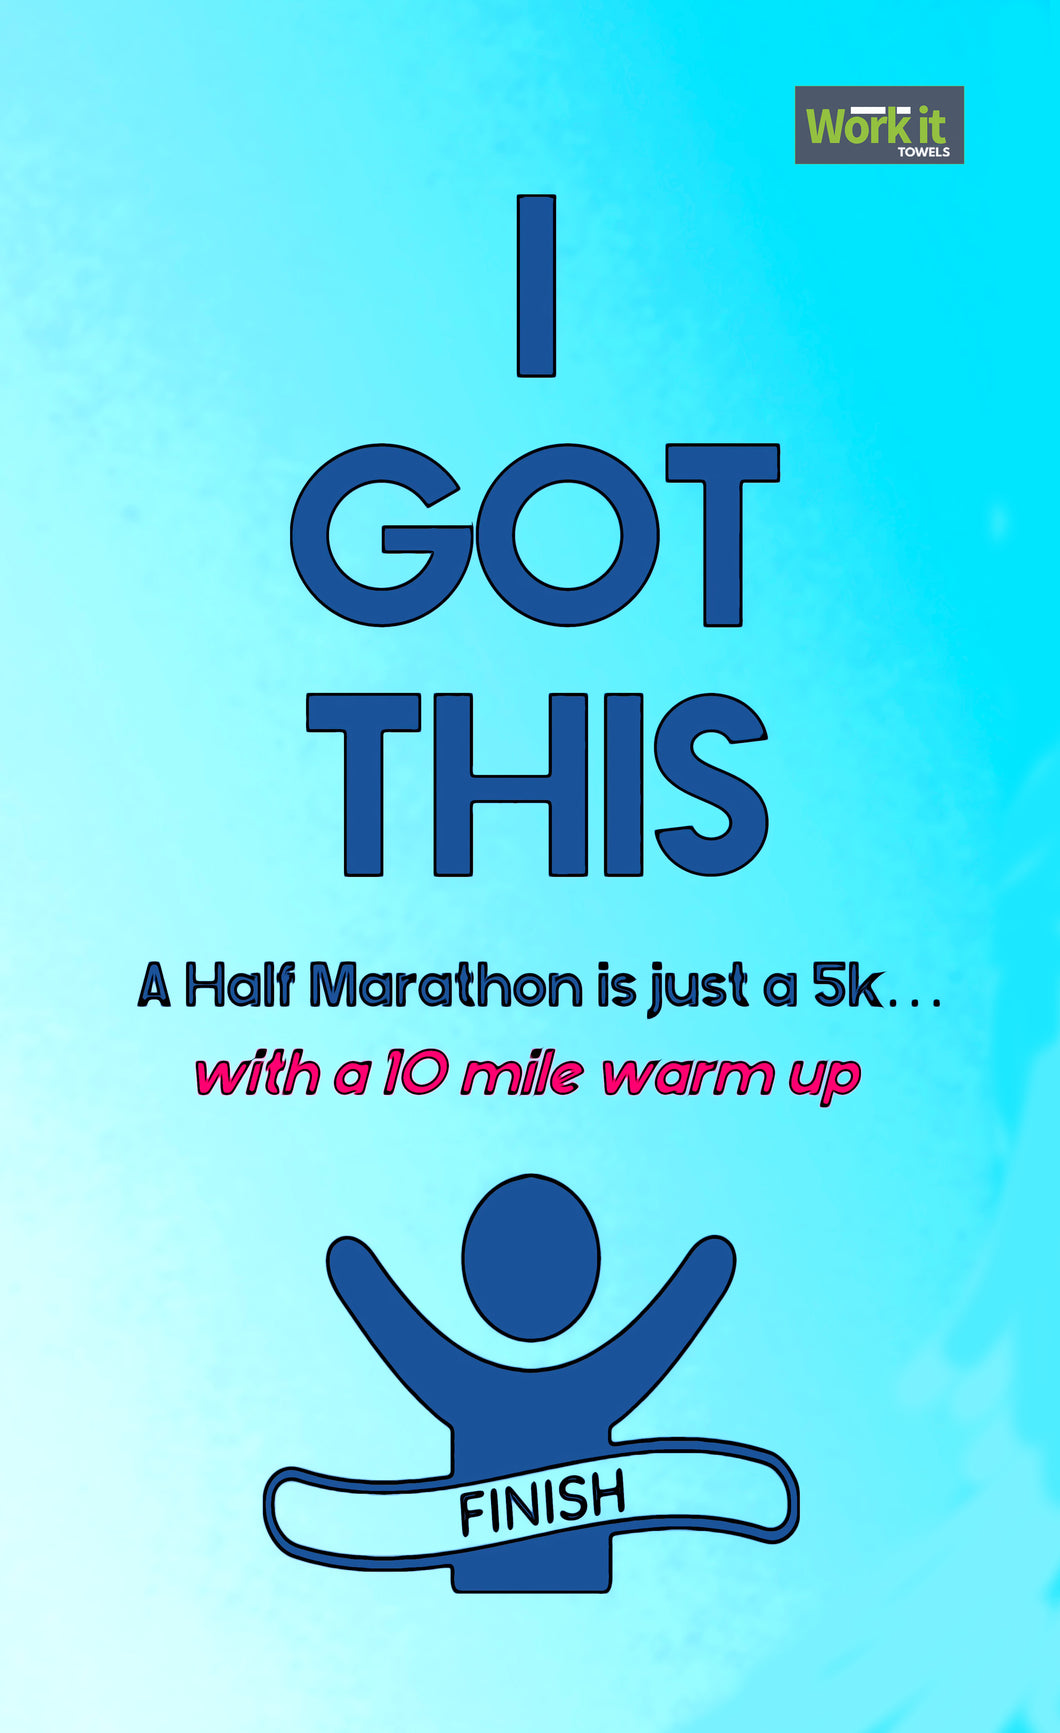 I Got This Half Marathon